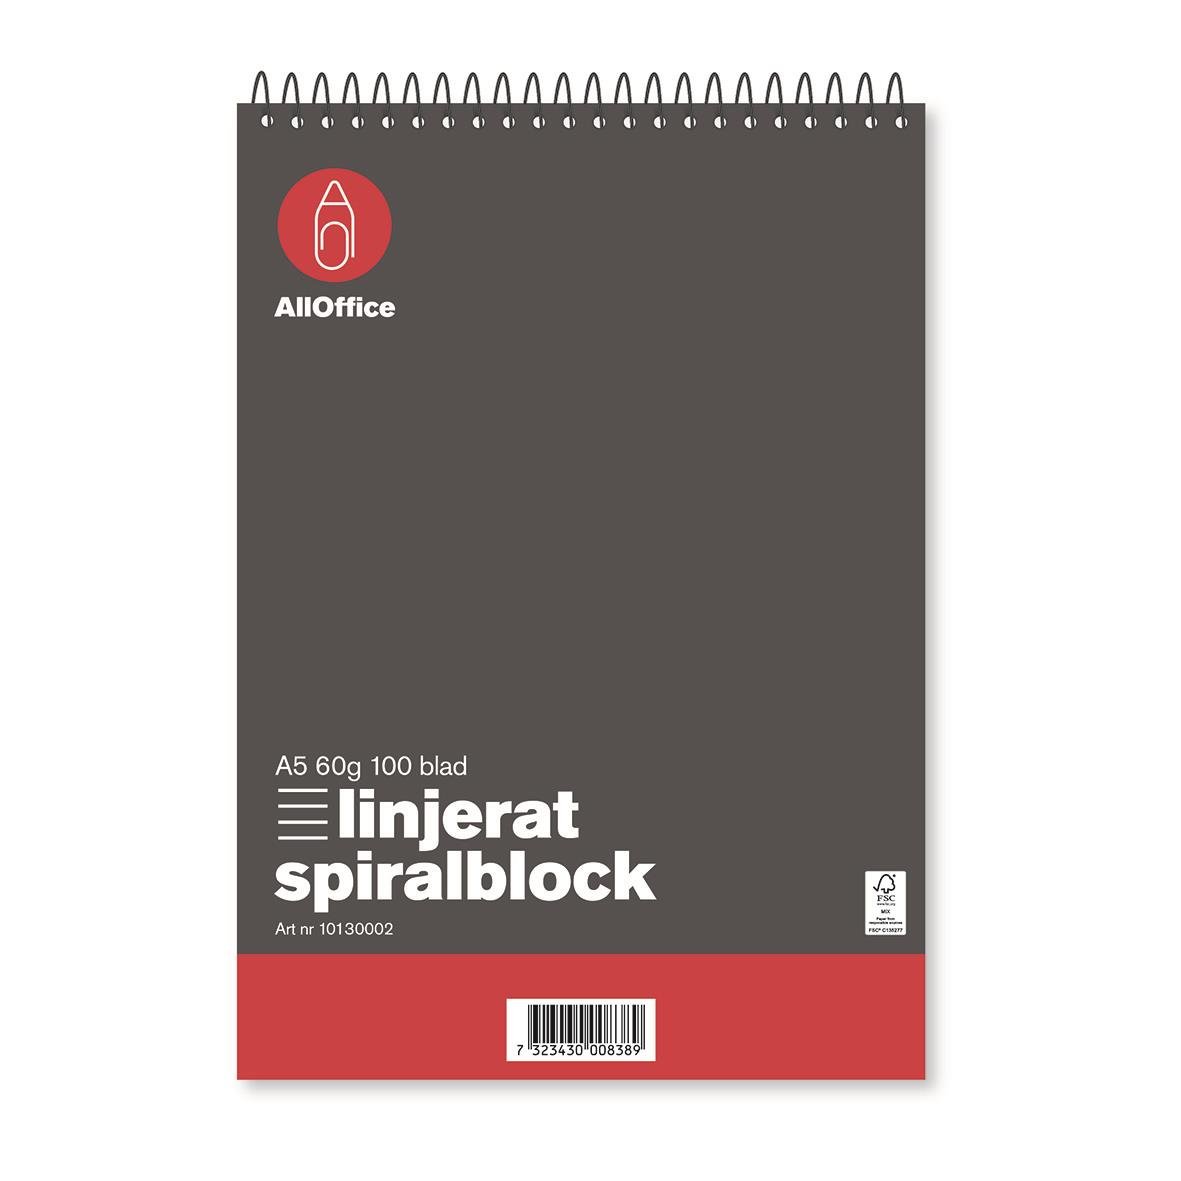 Spiralblock AllOffice linjerat A5 60g